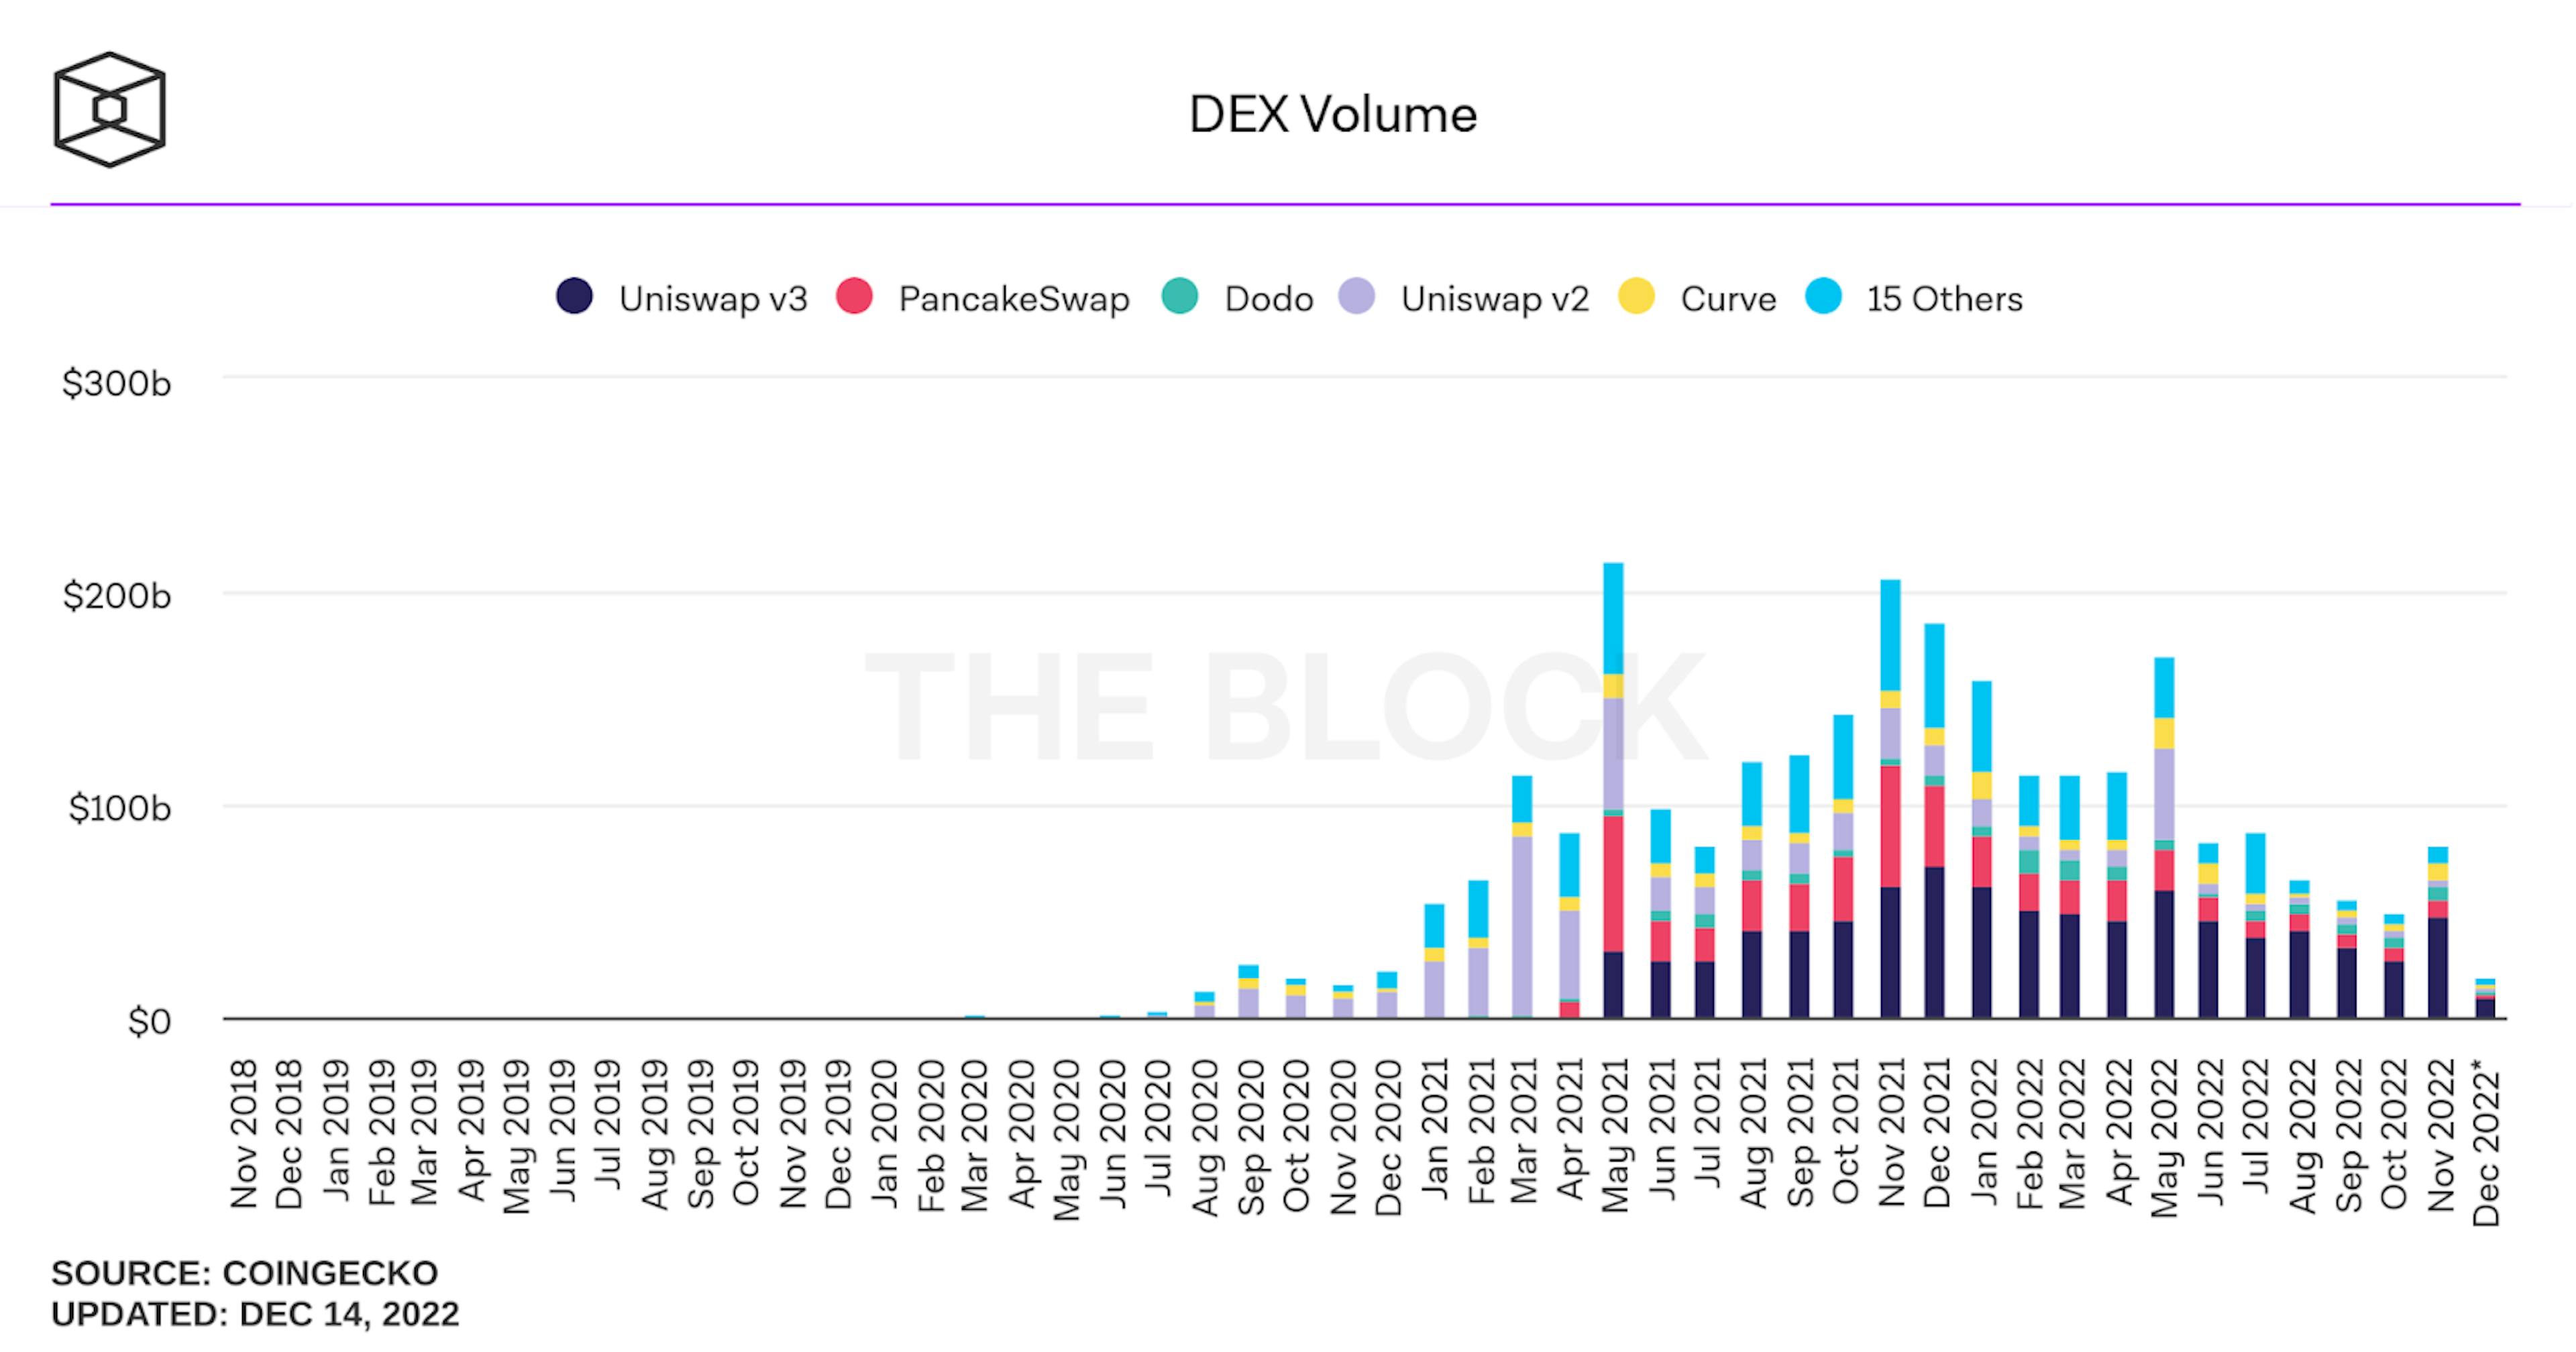 DEX Trading Volume